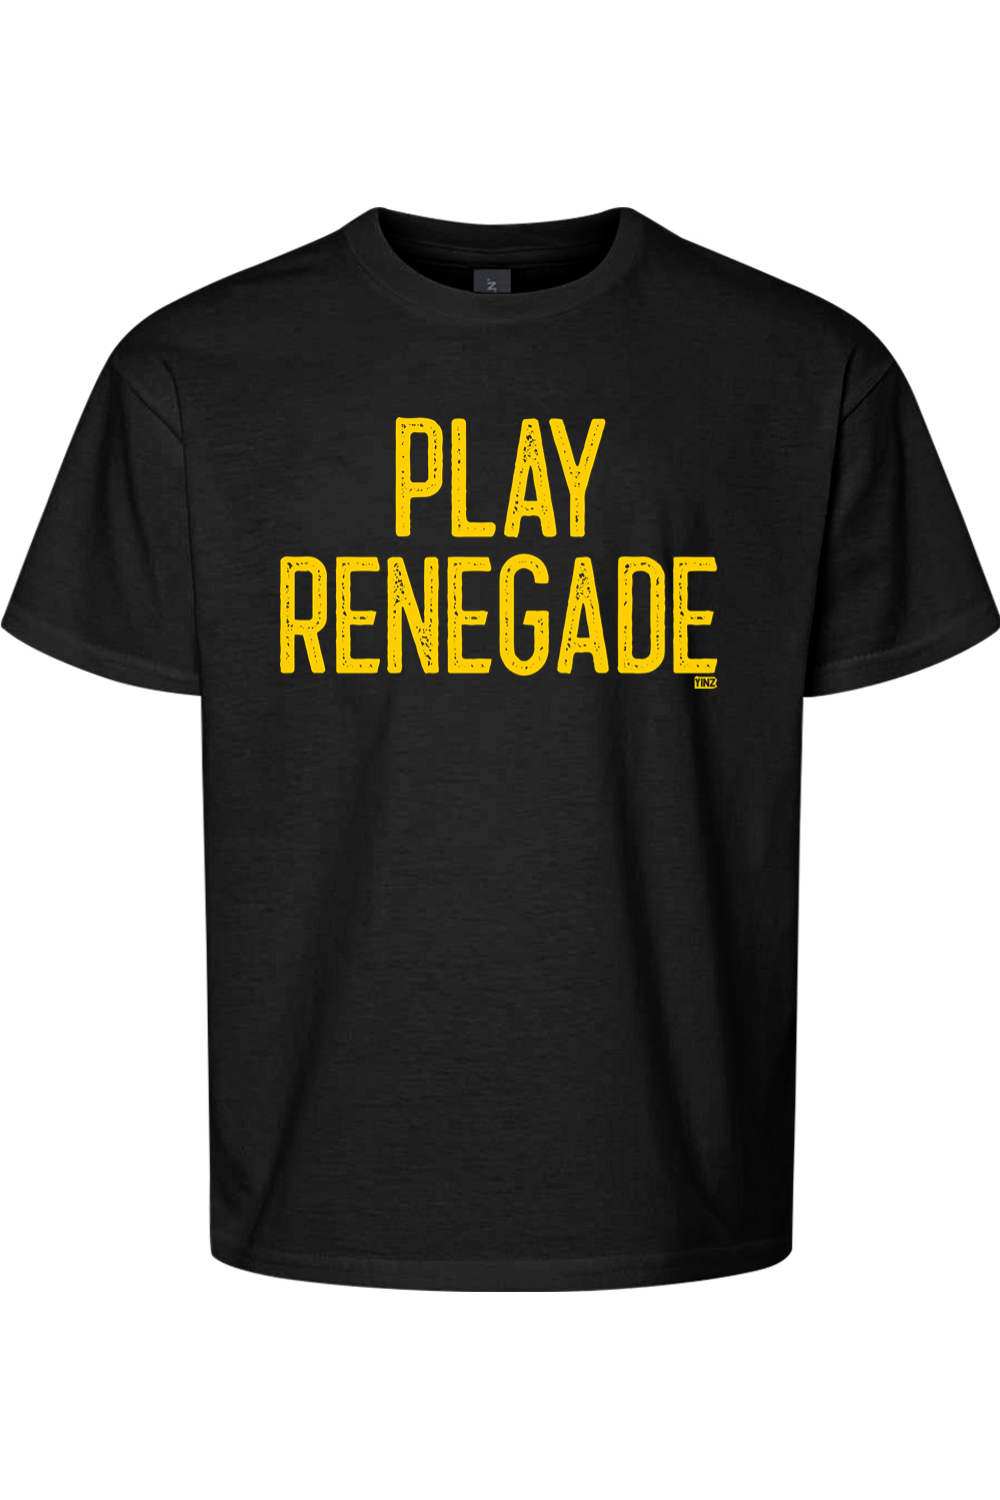 Play Renegade - Kids Tee - Yinzylvania